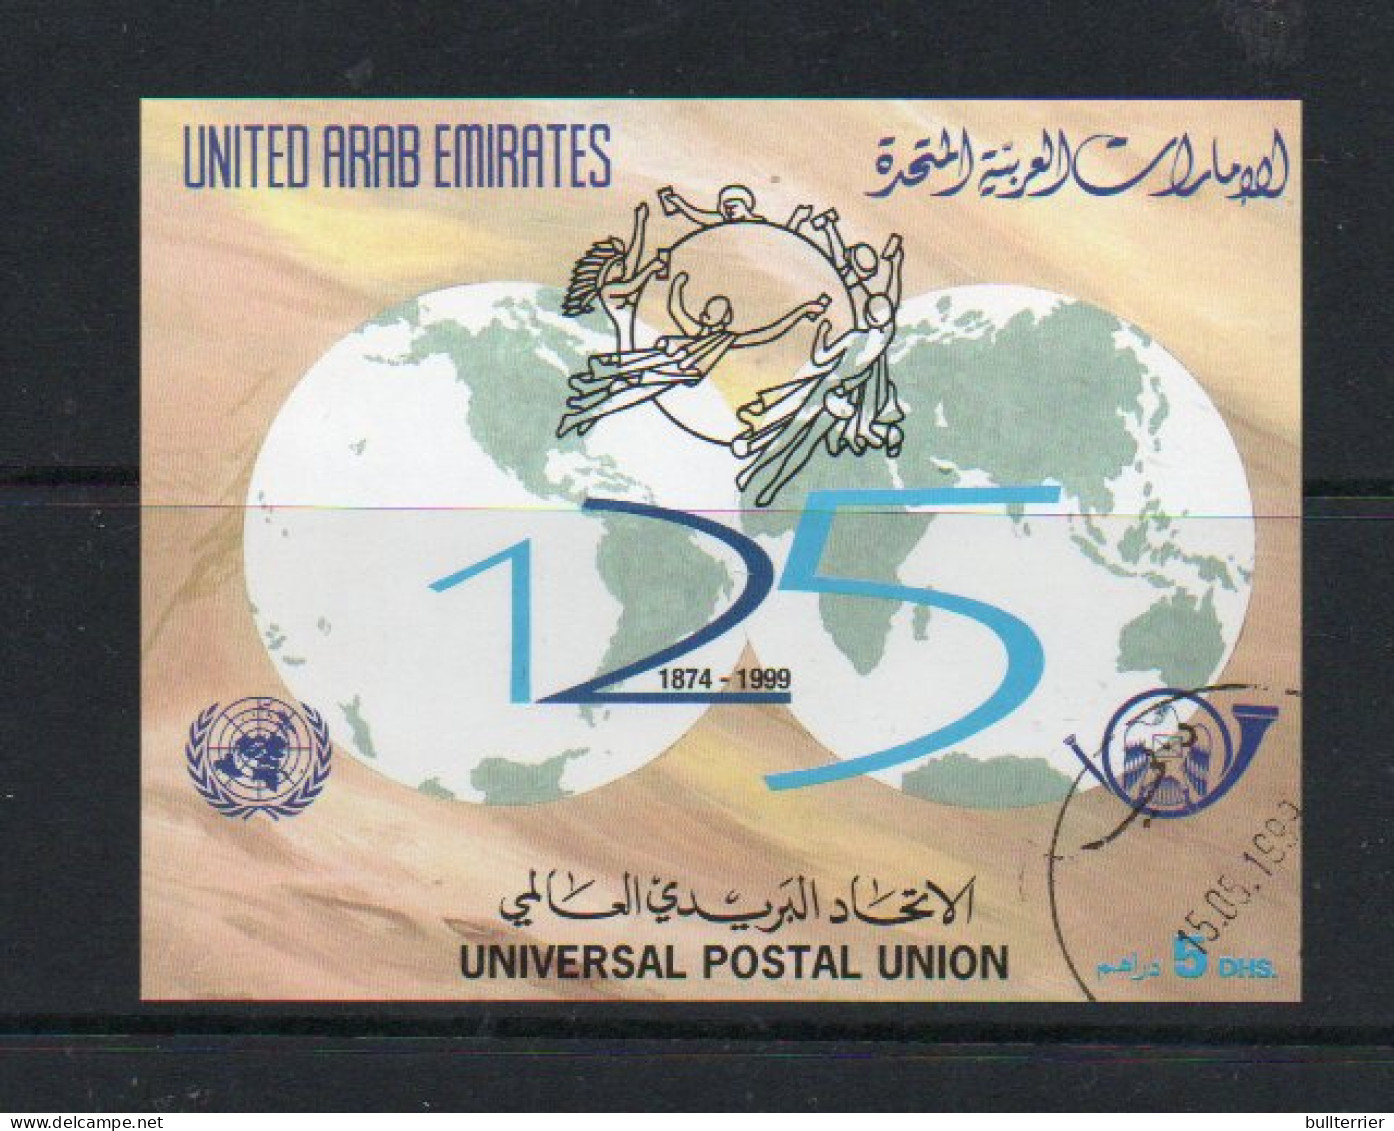 UNITED ARAB EMIRATES - 1999 - UPU SOUVENIR SHEET FINE USED  - Emirati Arabi Uniti